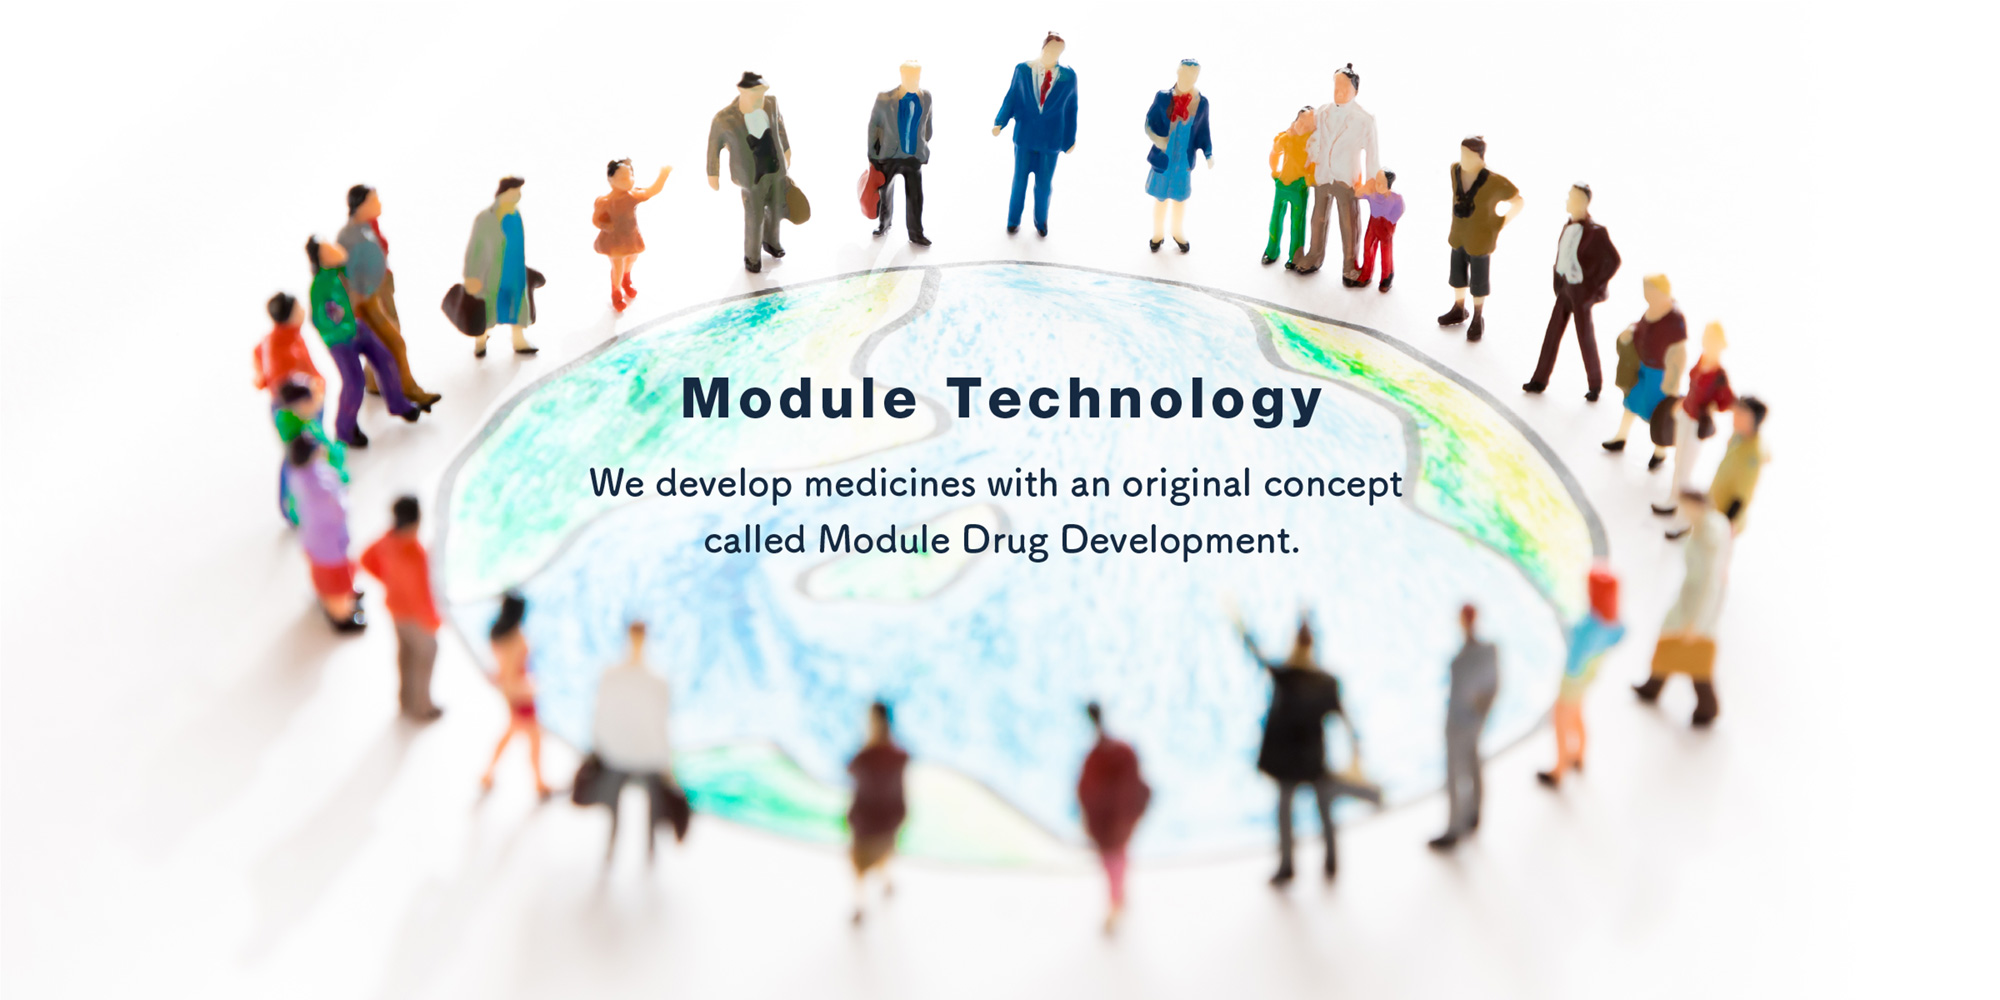 「Module Technology」－“Web develop medicines with an original concept called Module Drug Development.”